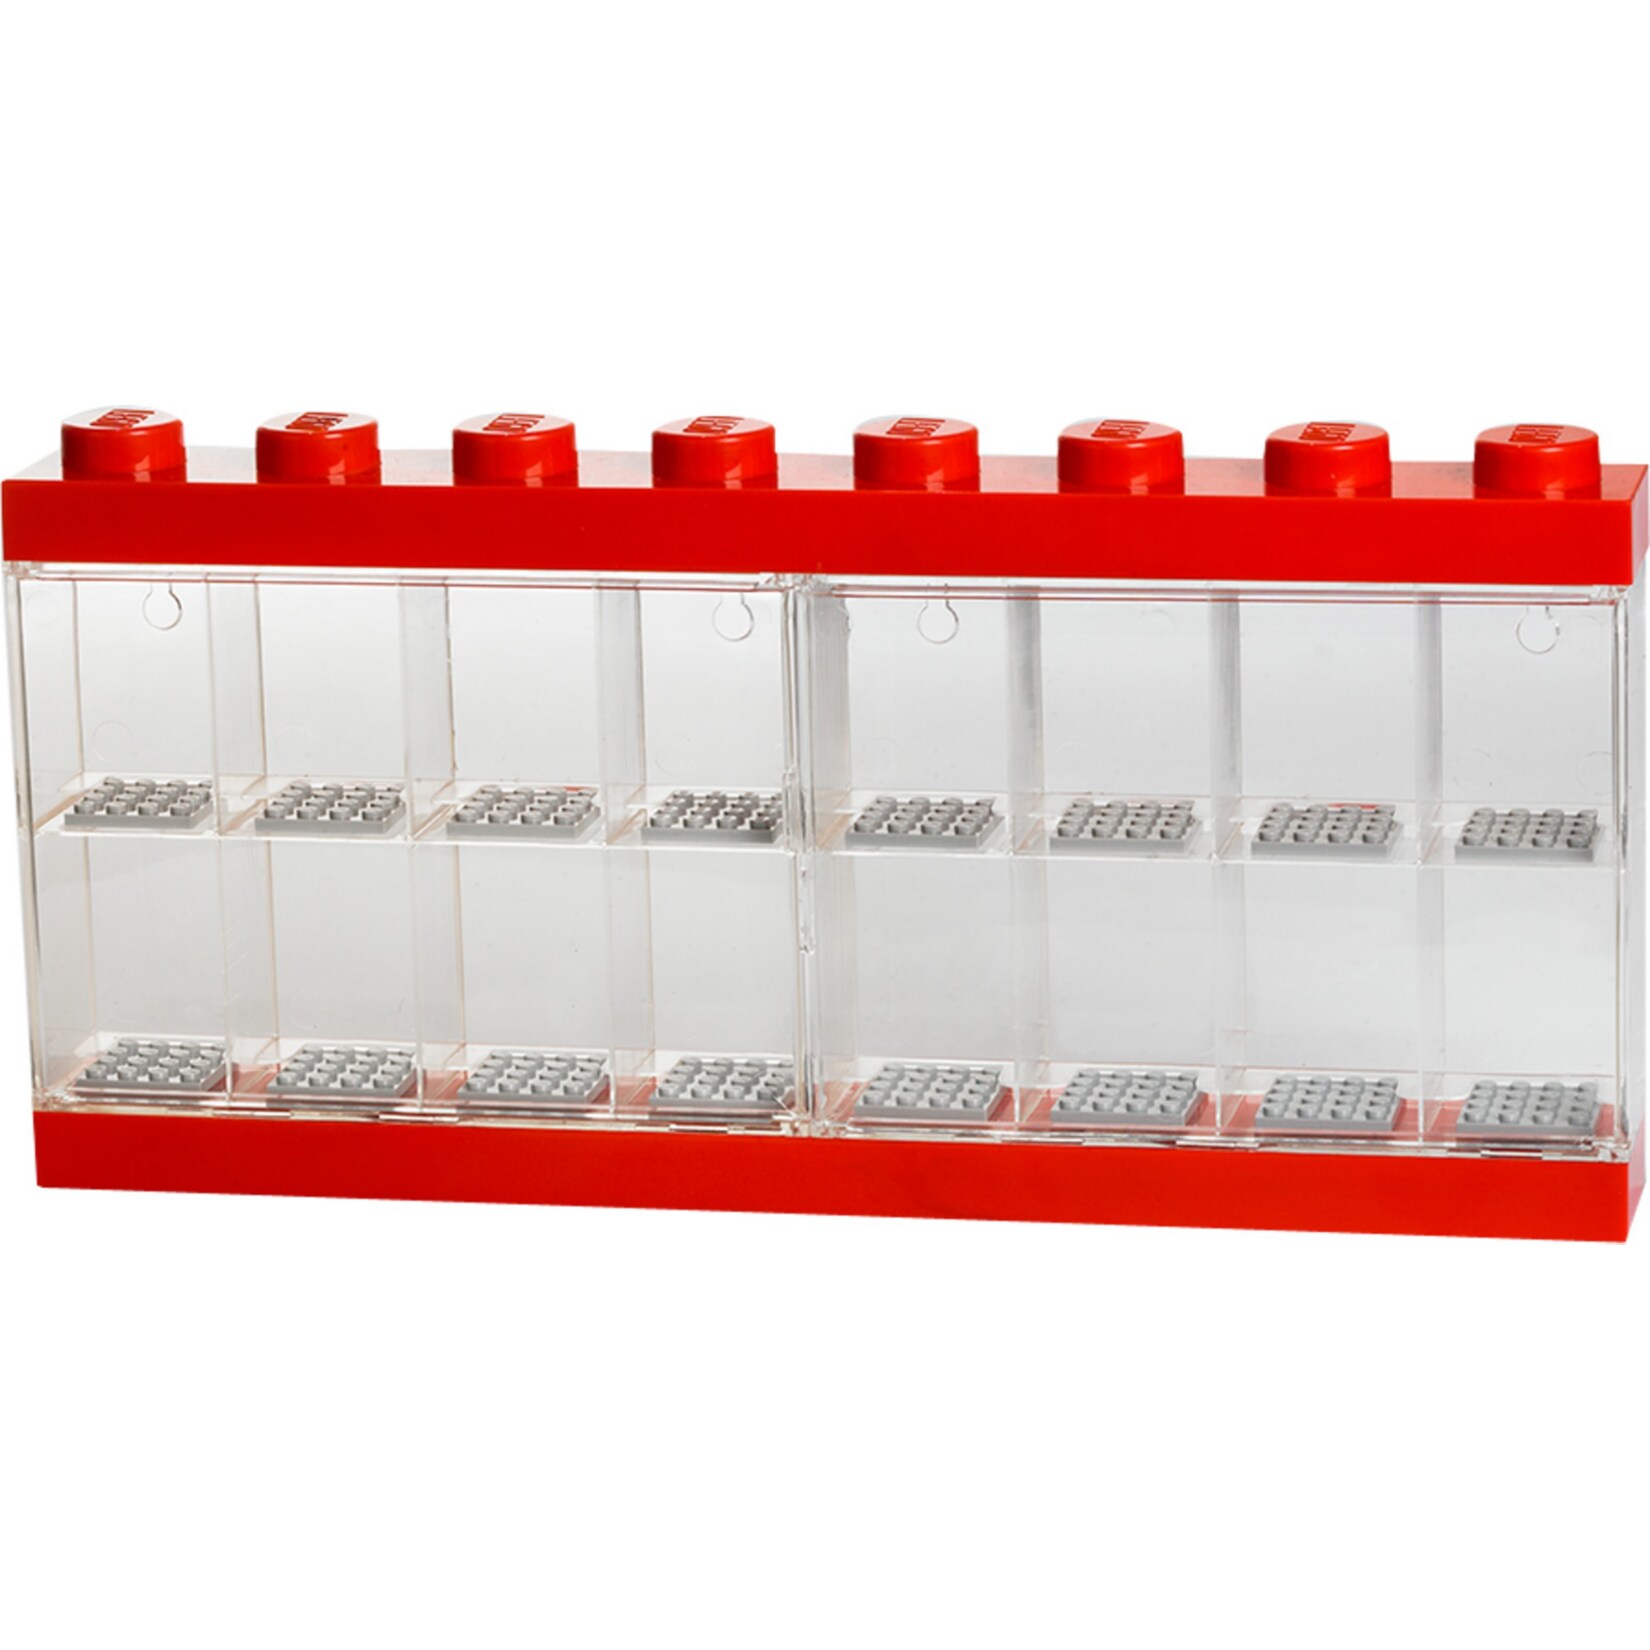 Room Copenhagen Aufbewahrungsbox LEGO Minifiguren Display Case 16 rot